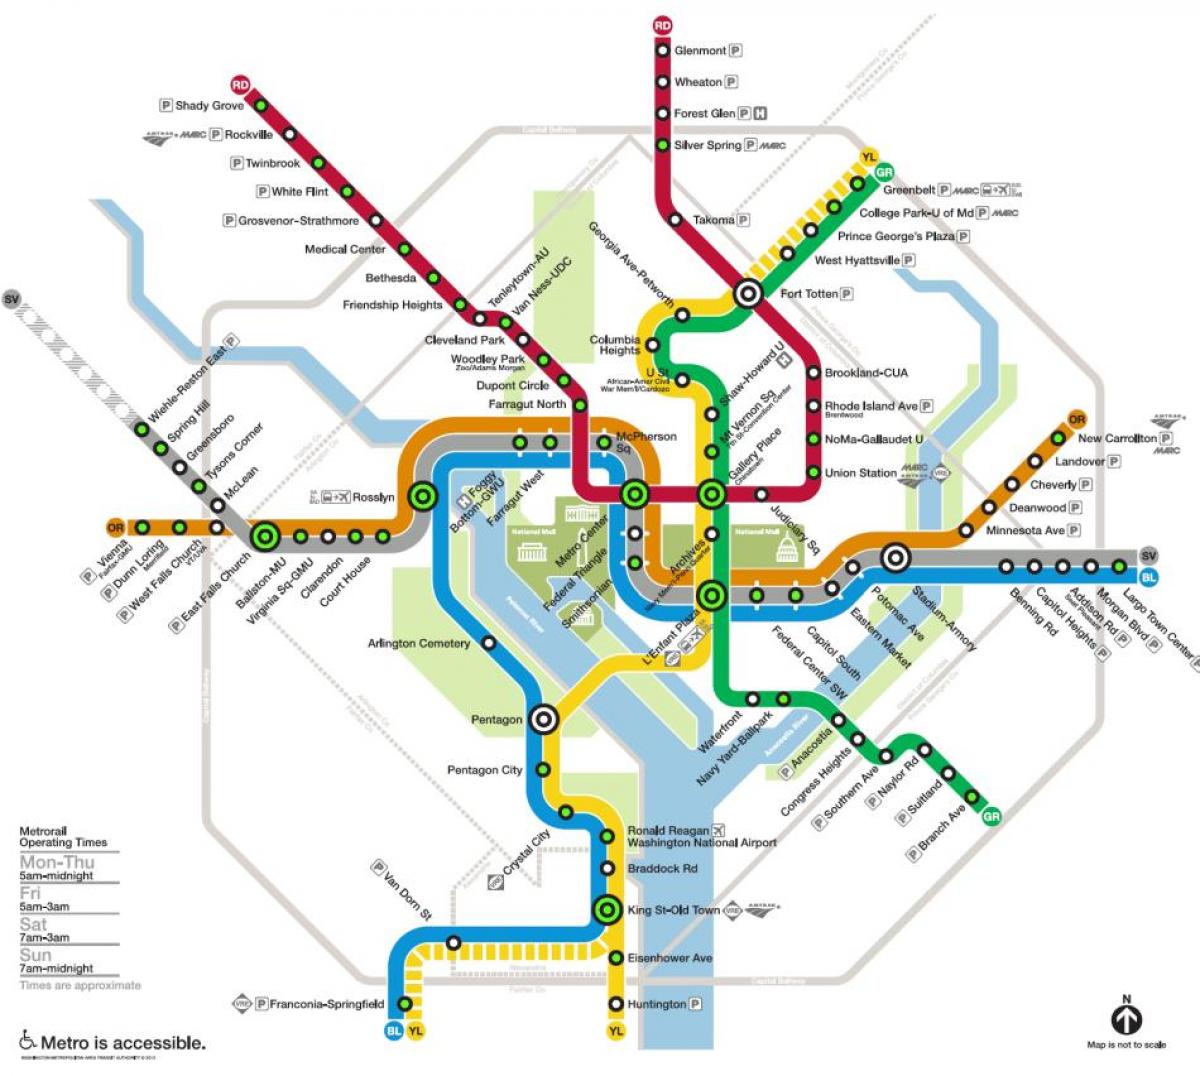 вашингтоны метро станц зураг